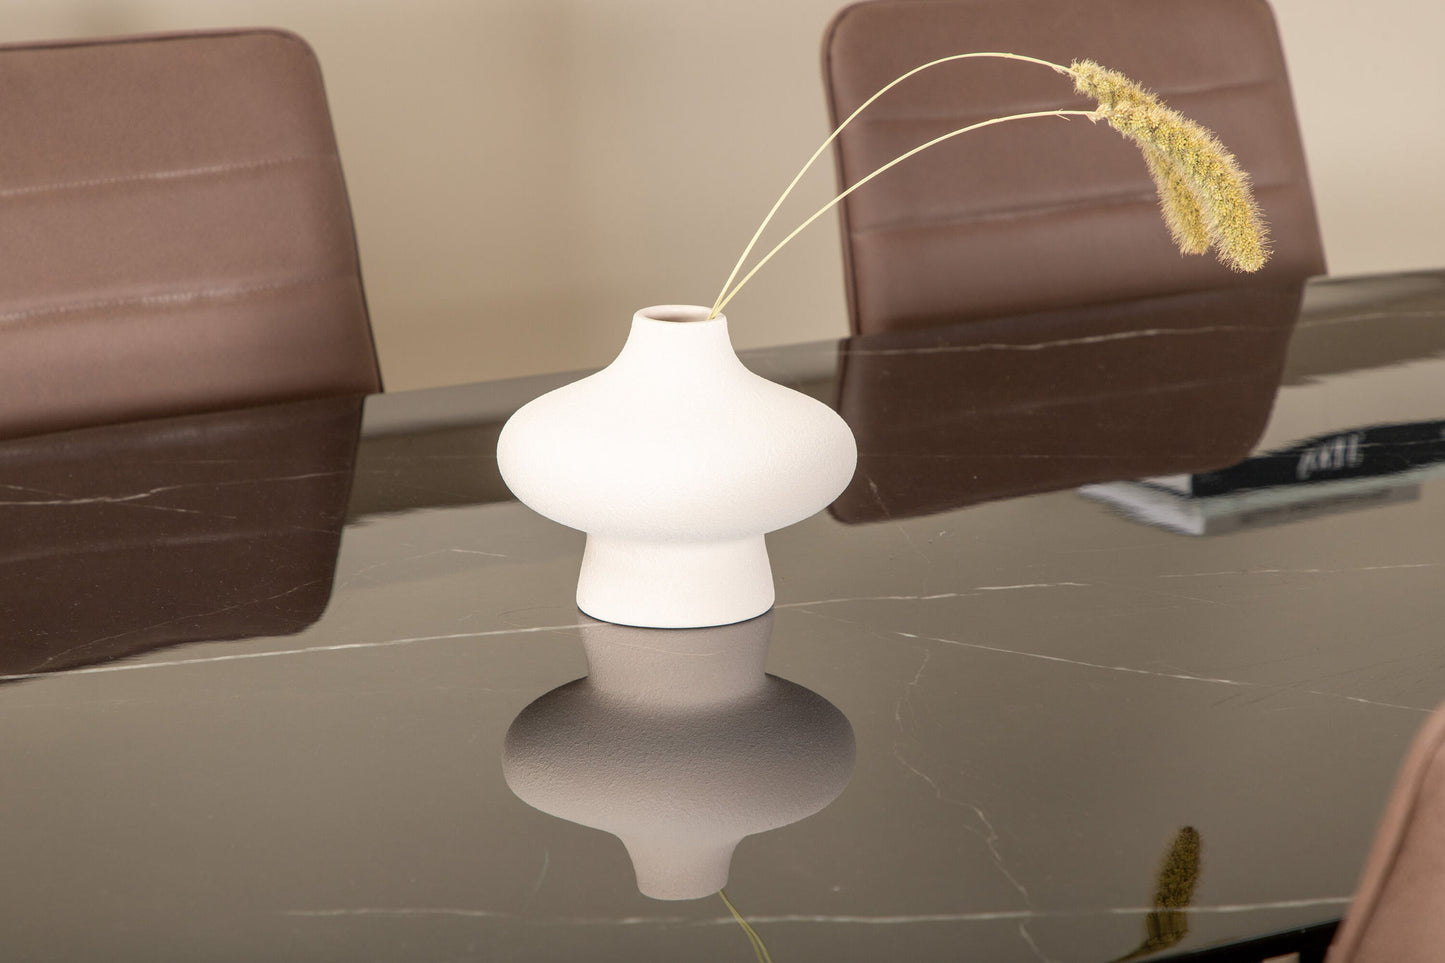 Pillan - Ovalt spisebord, Sort glas Marmor+Widu Lyx Stol, Sort Brun mikrofiber